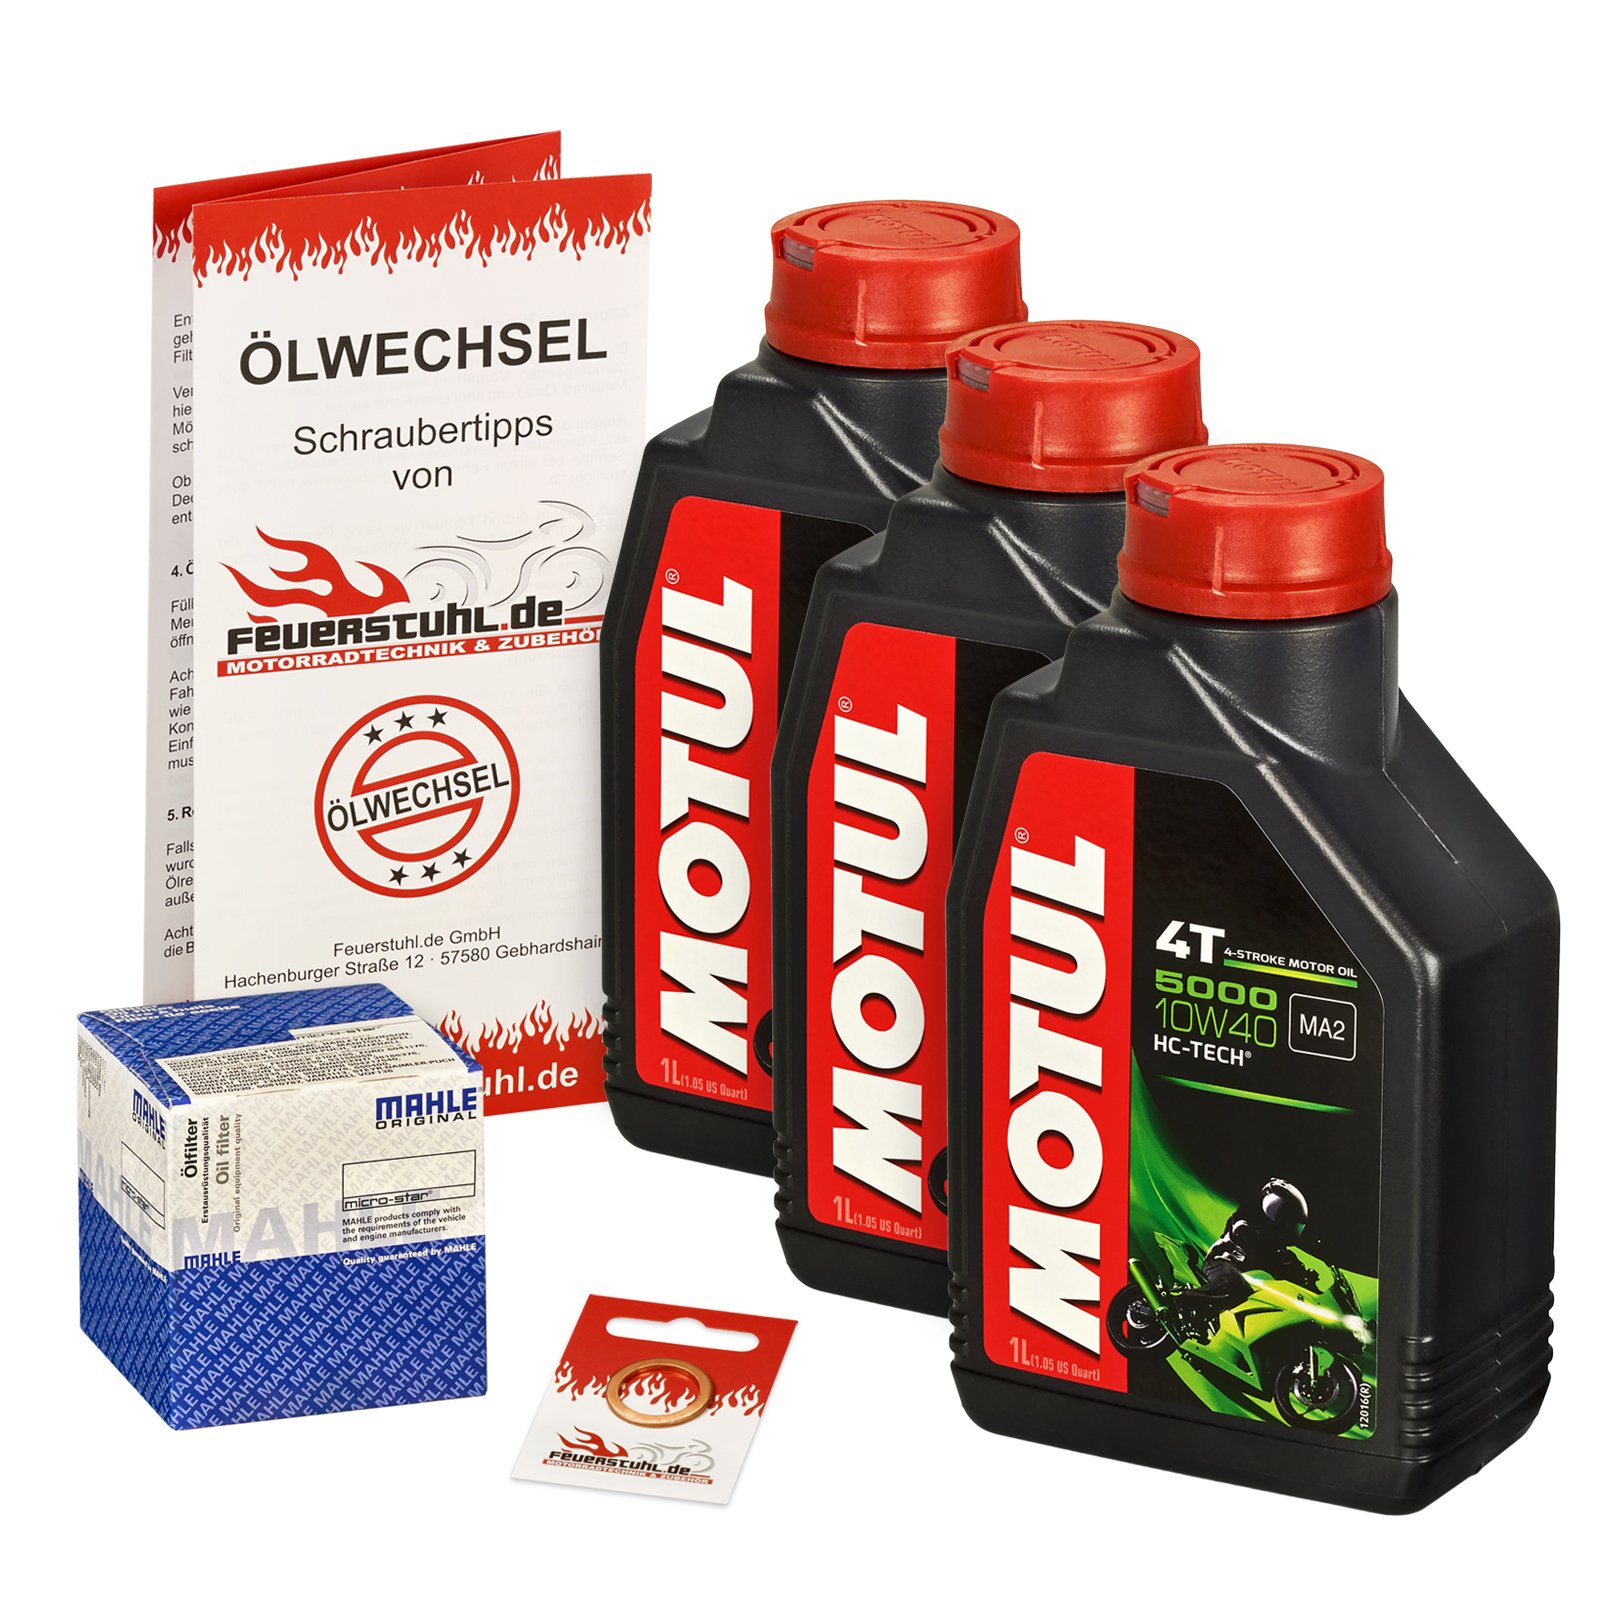 Motul 10W-40 Öl + Mahle Ölfilter für Honda VT 750 C/C2 Shadow, 97-02, RC44 - Ölwechselset inkl. Motoröl, Filter, Dichtring von Feuerstuhl.de GmbH